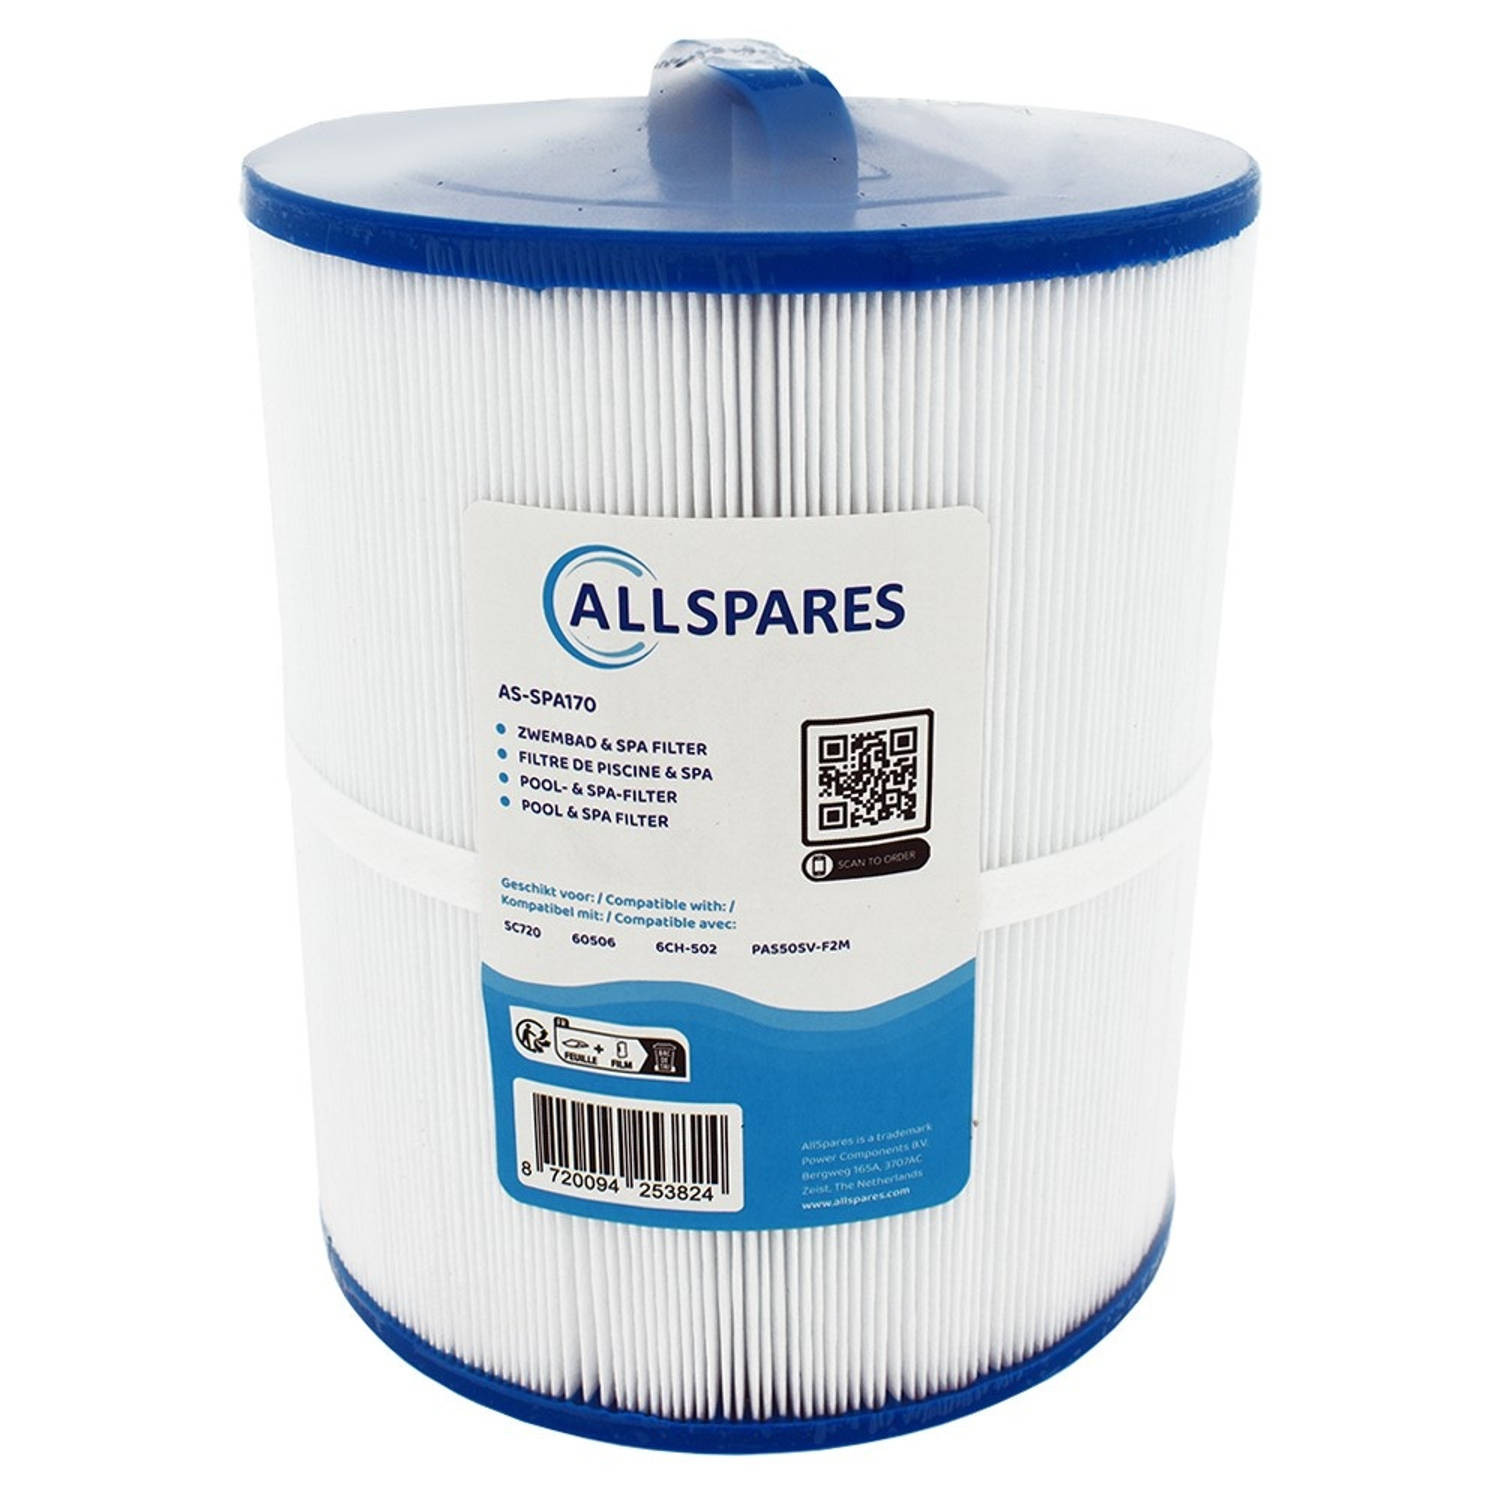 AllSpares Spa Waterfilter geschikt voor SC720 / 60506 / 6CH-502